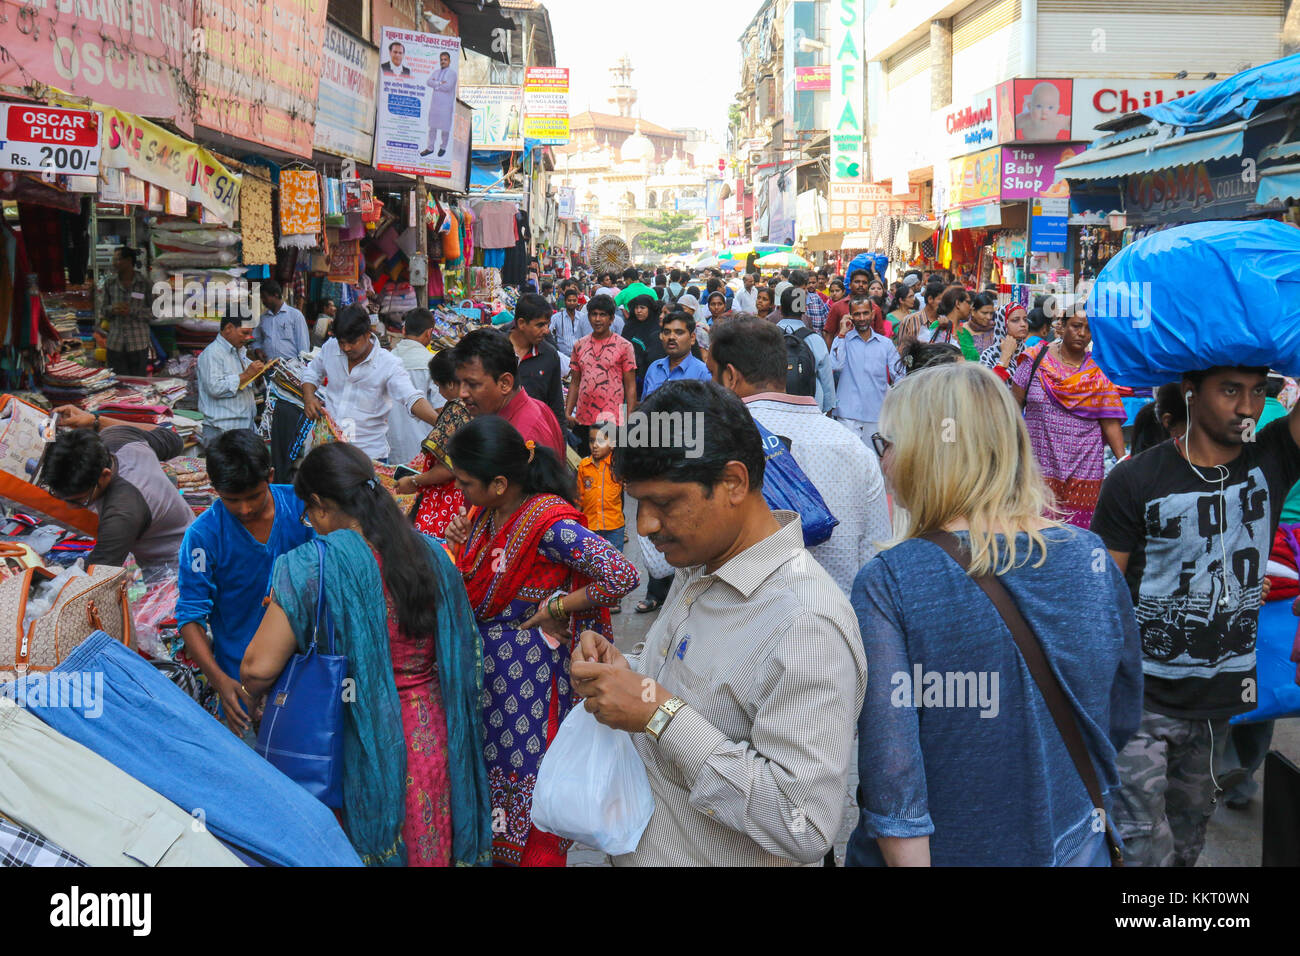 Crowded street in Mumbai, India Stock Photo